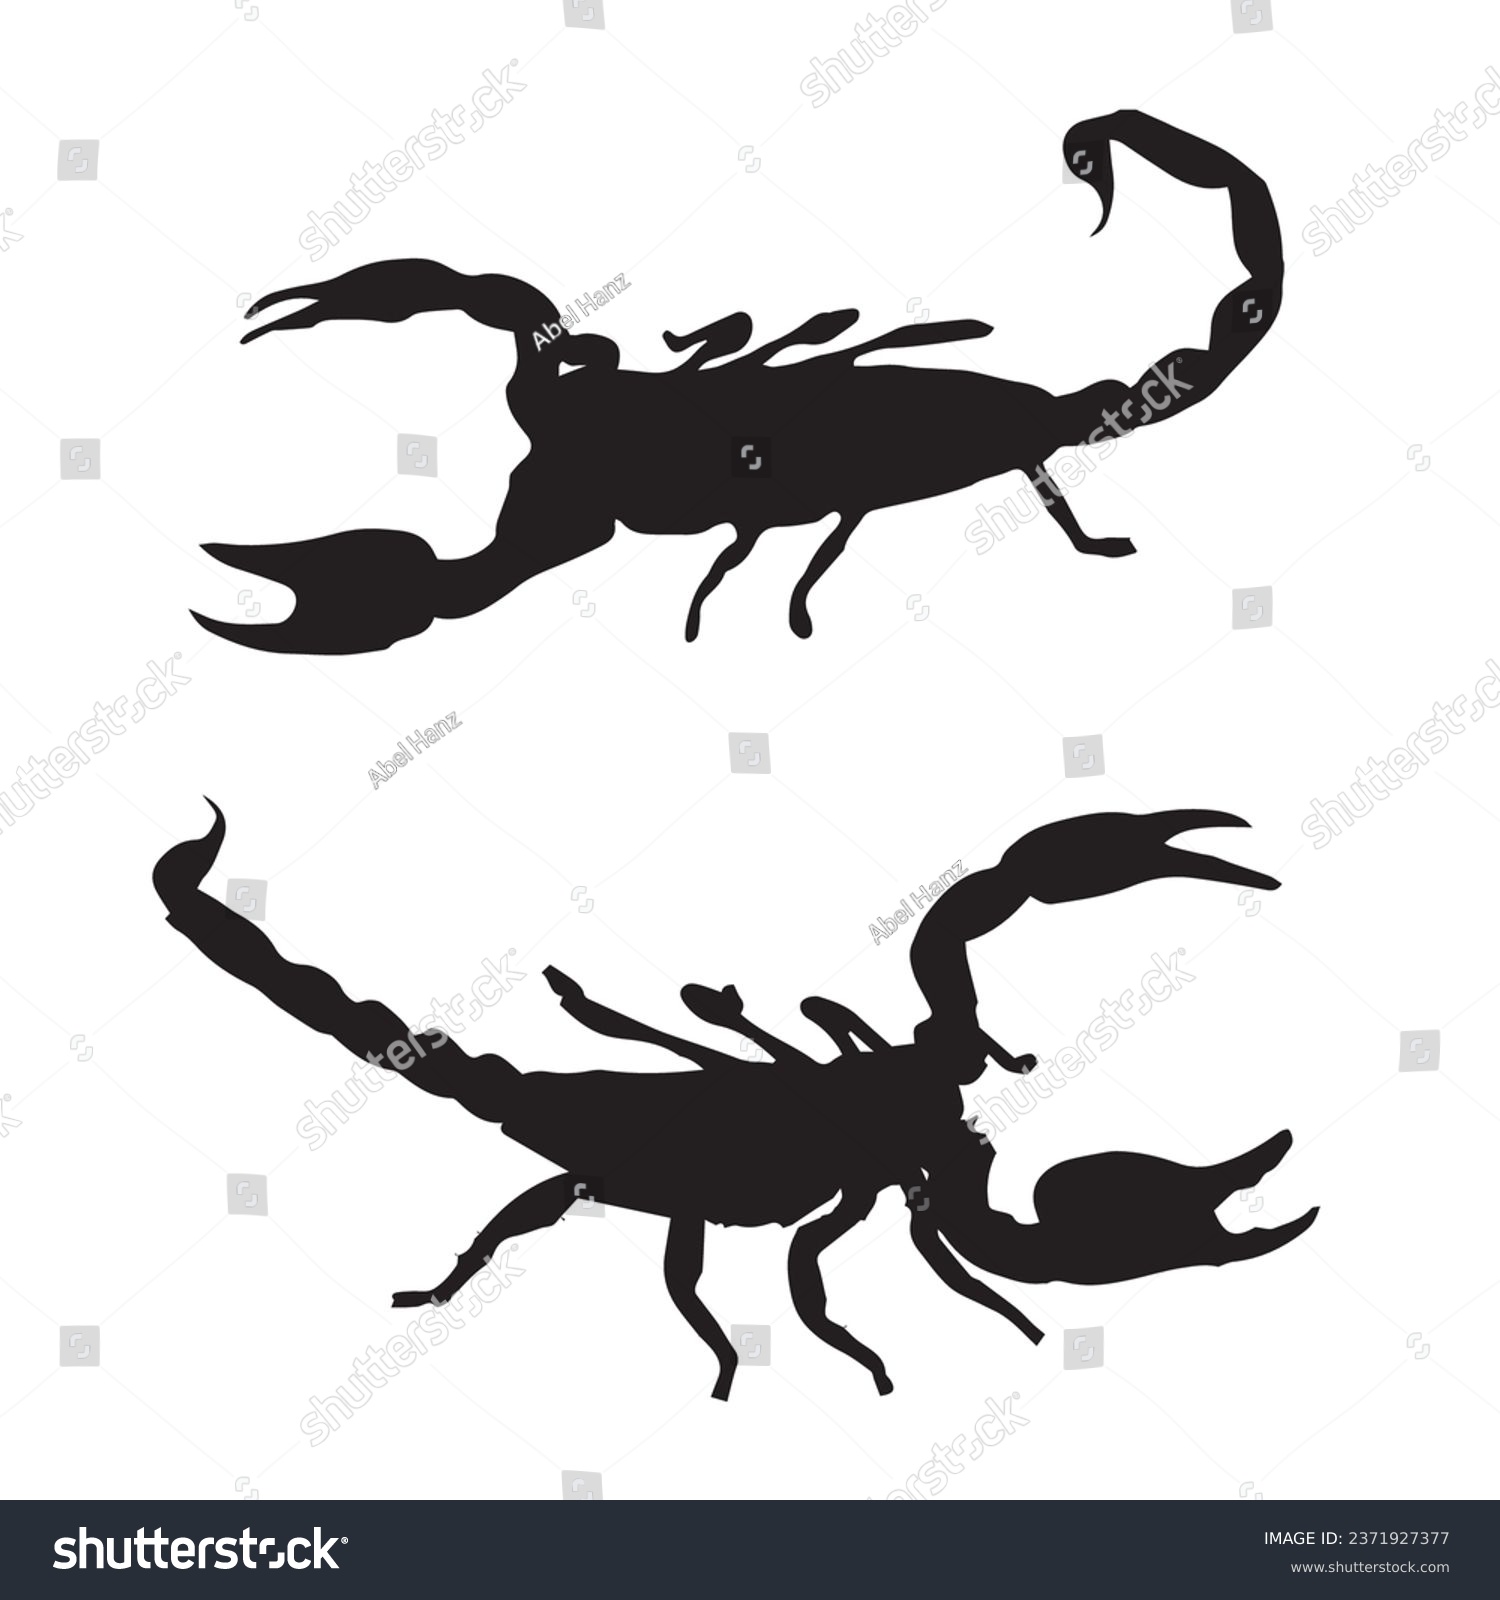 SVG of Vector Illustration of Scorpion Silhouette svg